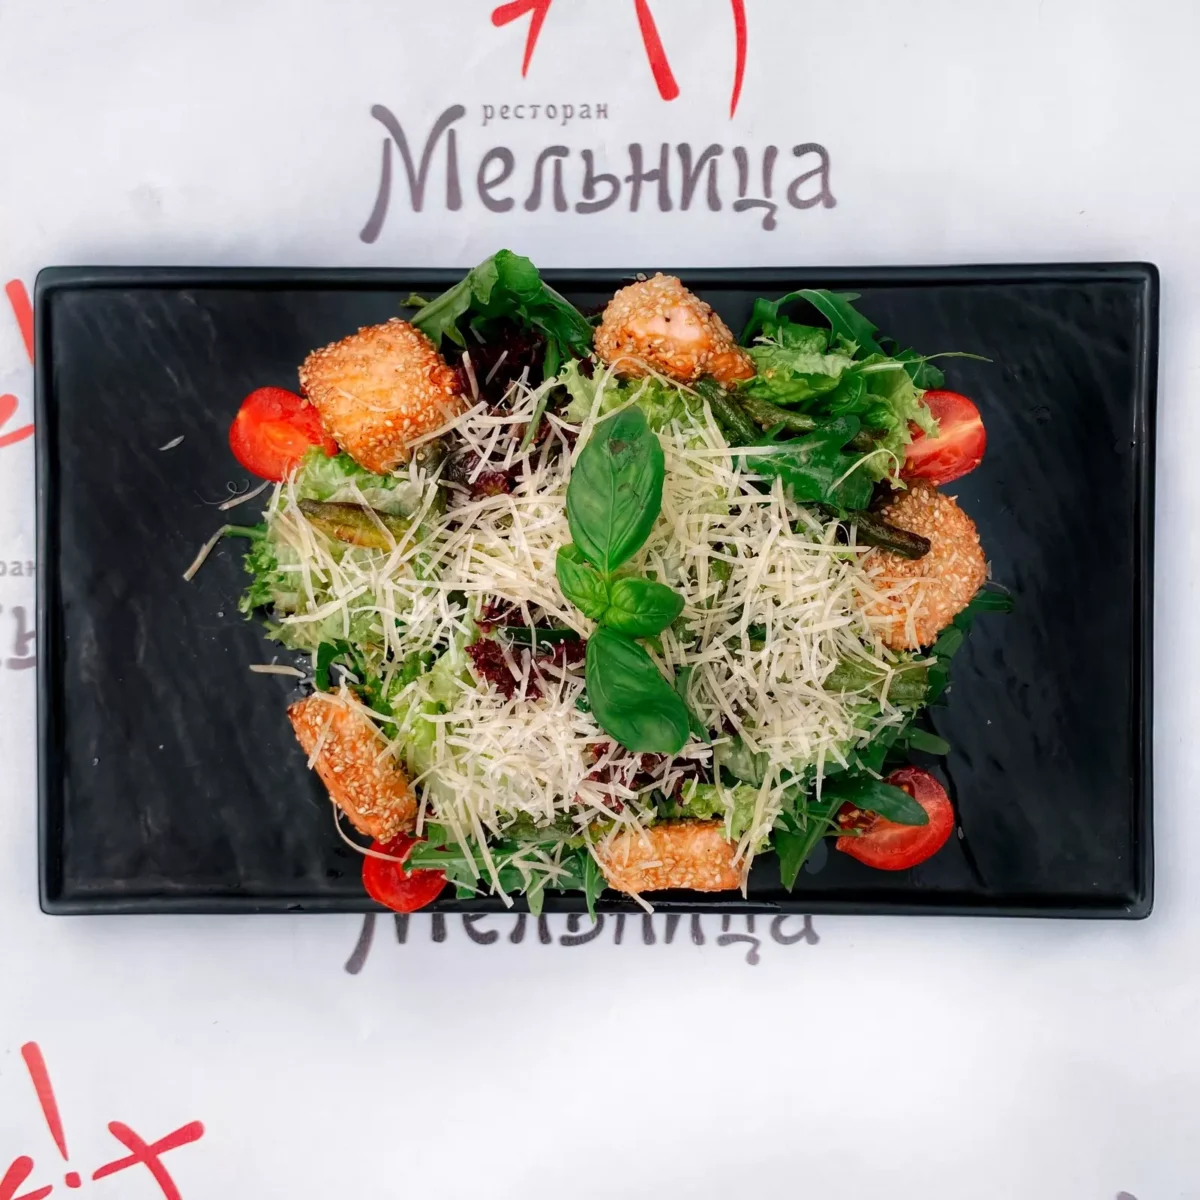 Warm salad with salmon in sesame • Melnitsa restaurant, Kharkiv